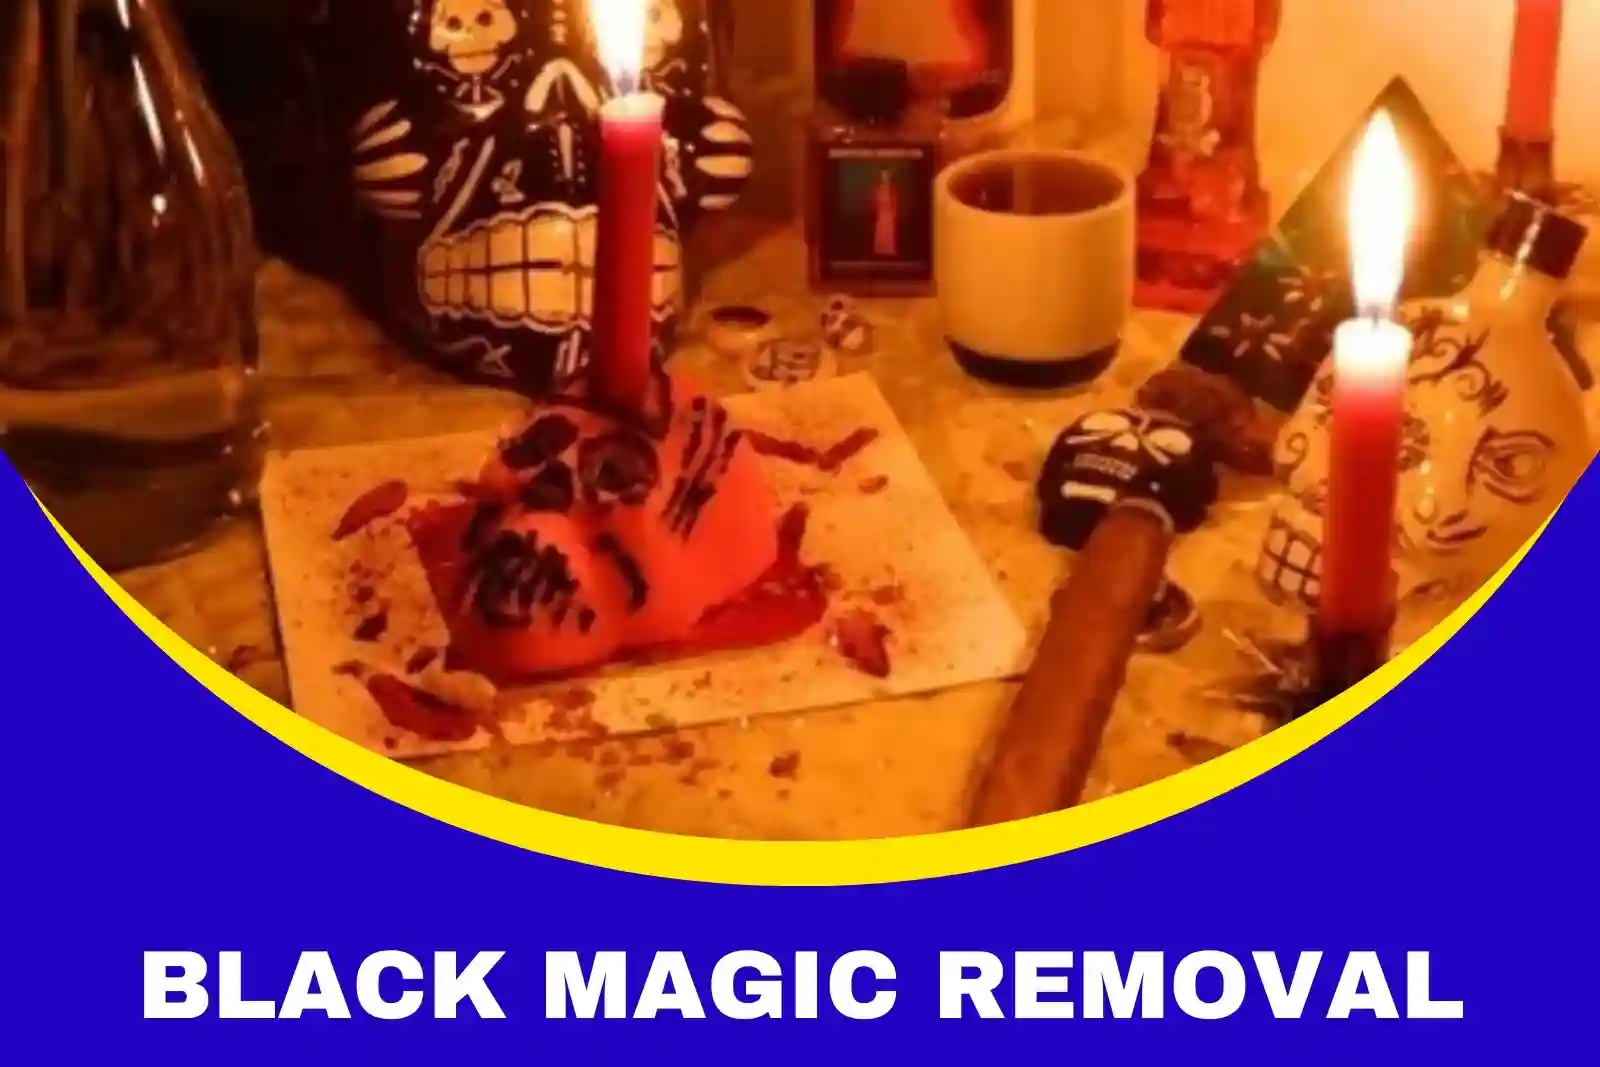 Black Magic removal